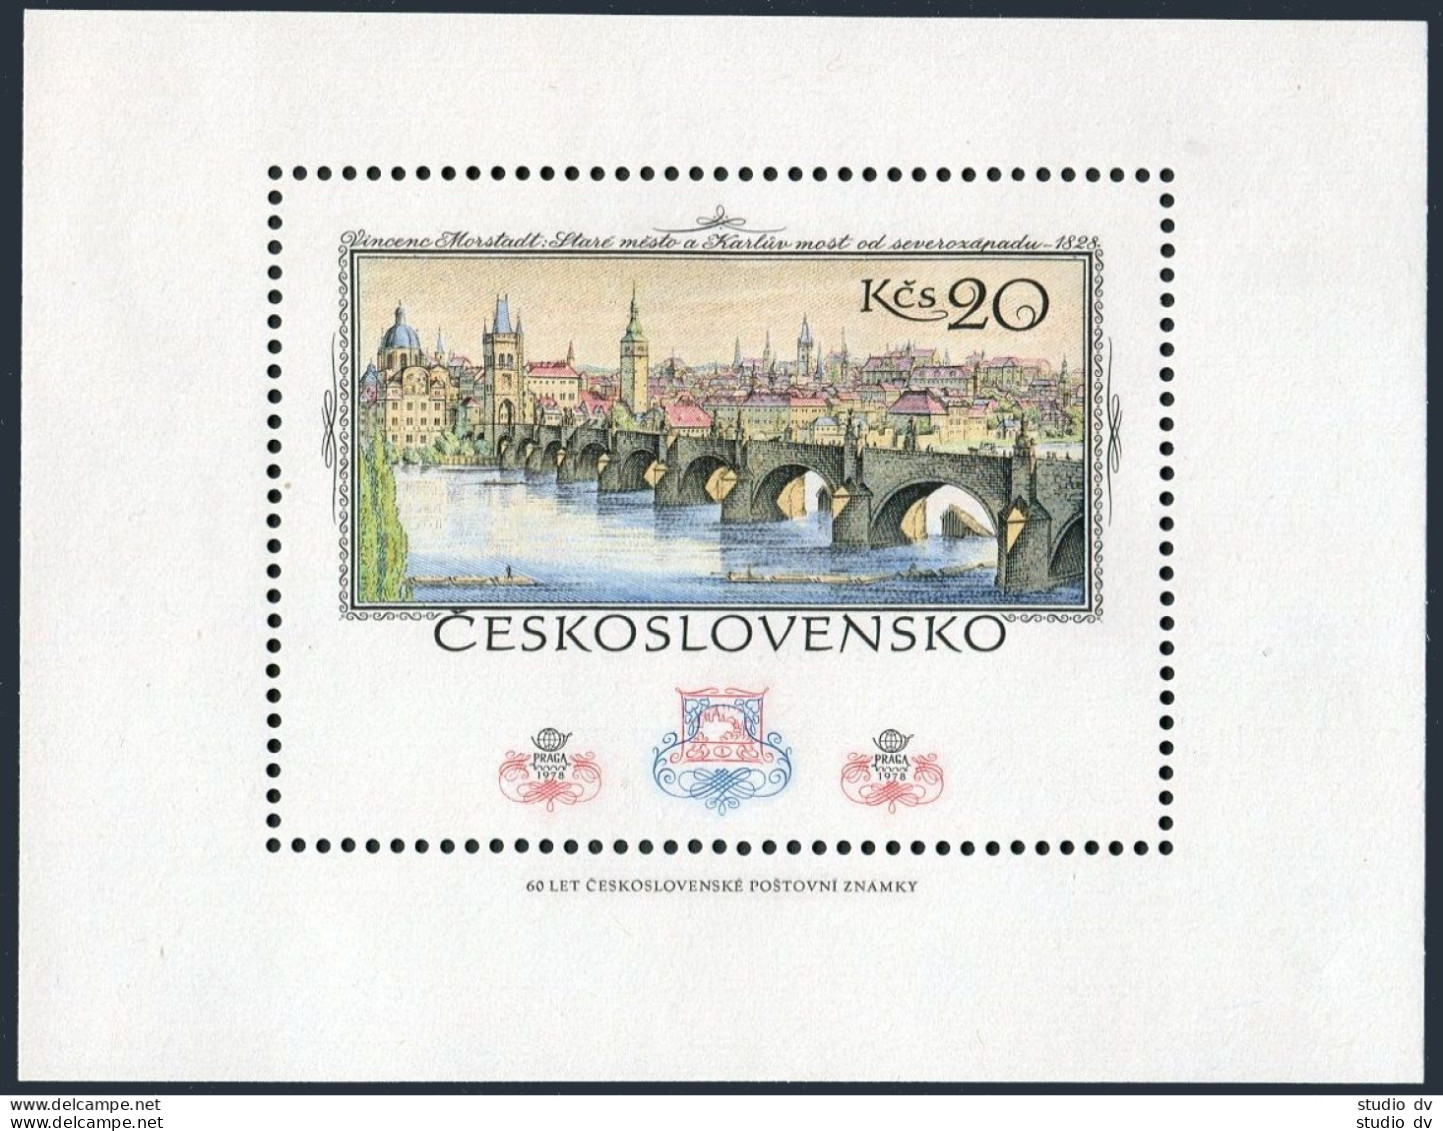 Czechoslovakia 2192-2195,2196,MNH. PRAGA-1978.New & Old Town,Charles Bridges.Art - Unused Stamps